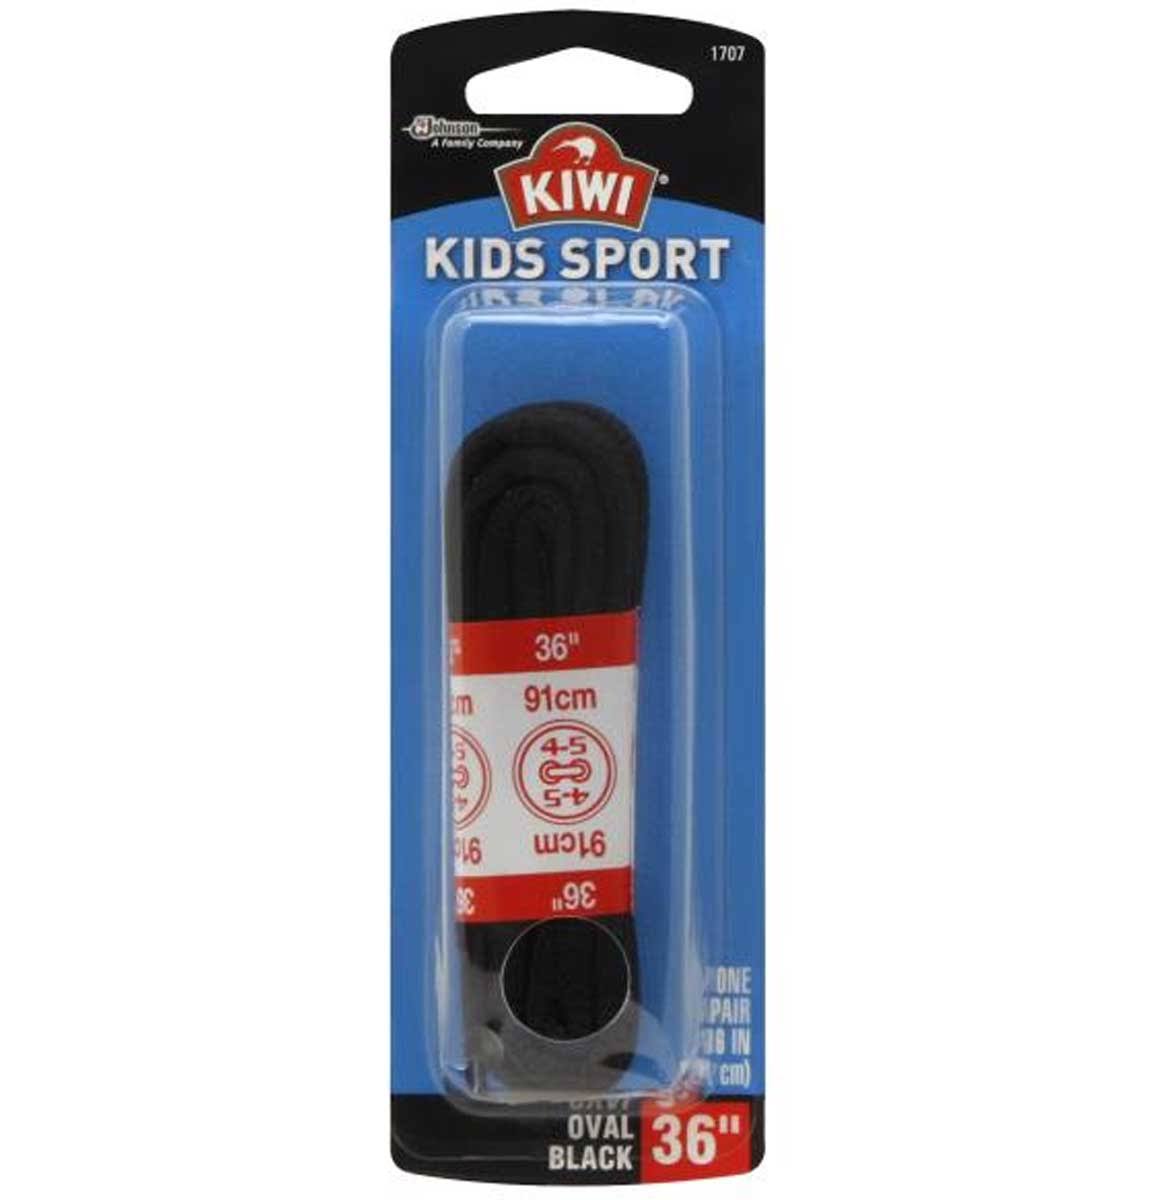 Kiwi Kid's Sport Laces - Black, 36"